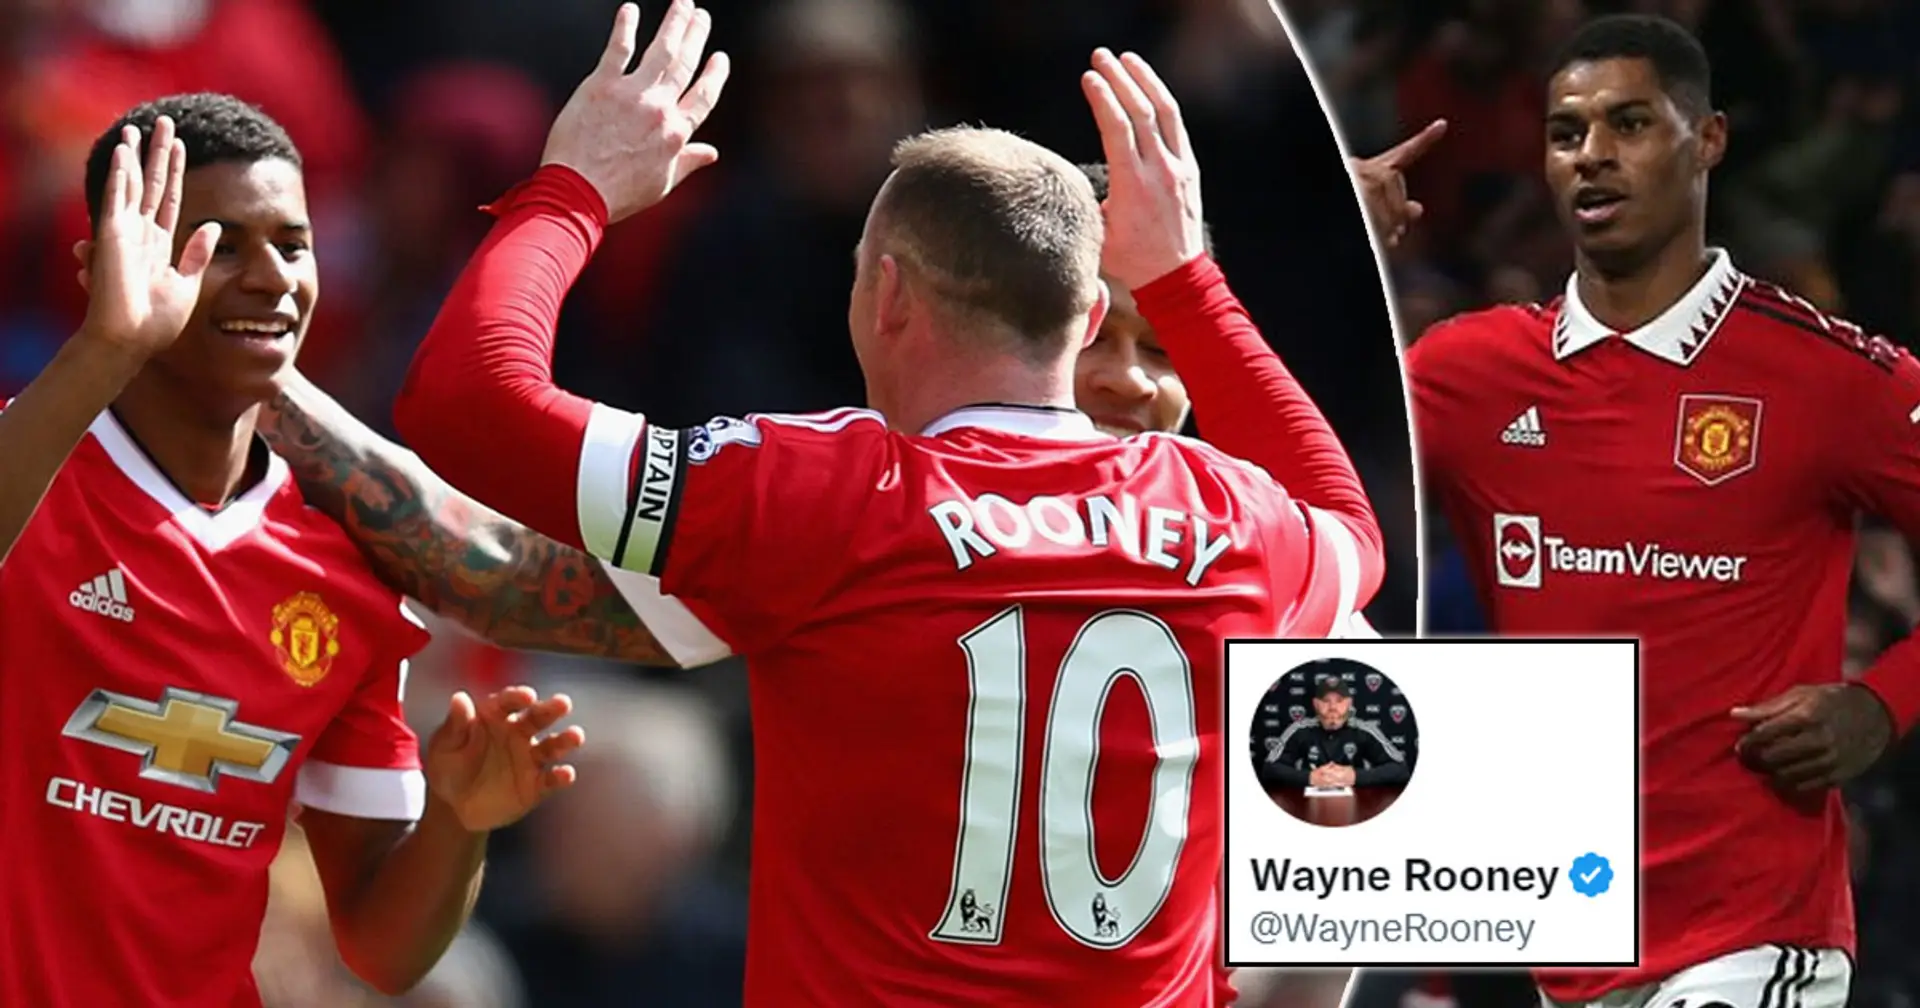 'Class': Rooney reacts to Rashford surpassing his Man United goal record